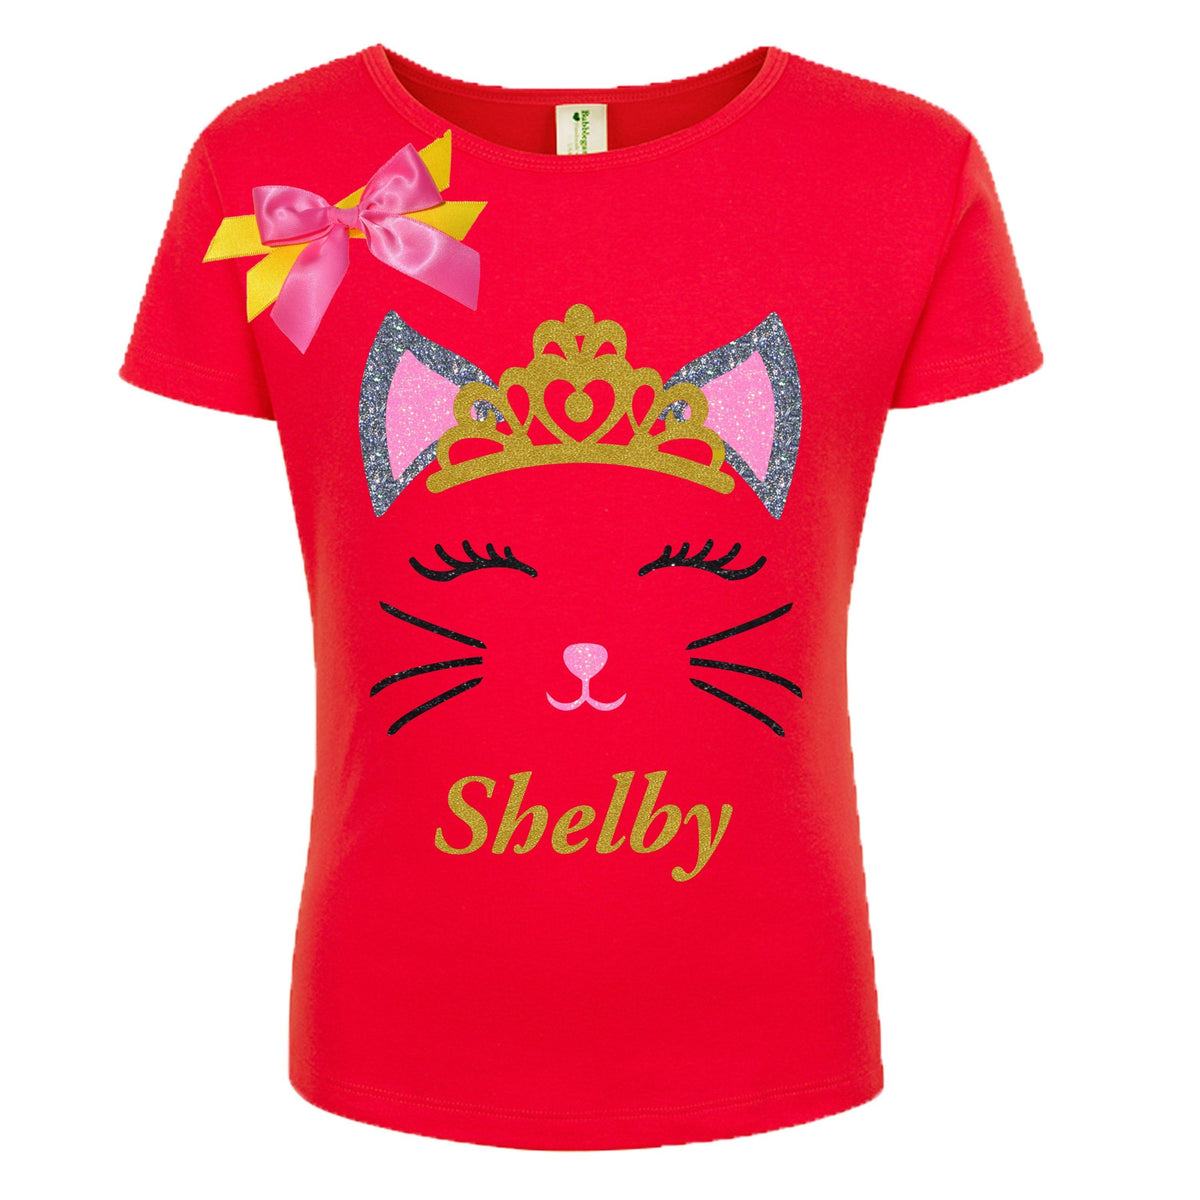 Little Girls Glitter Kitty Cat Shirt Personalized Gift - Cherry